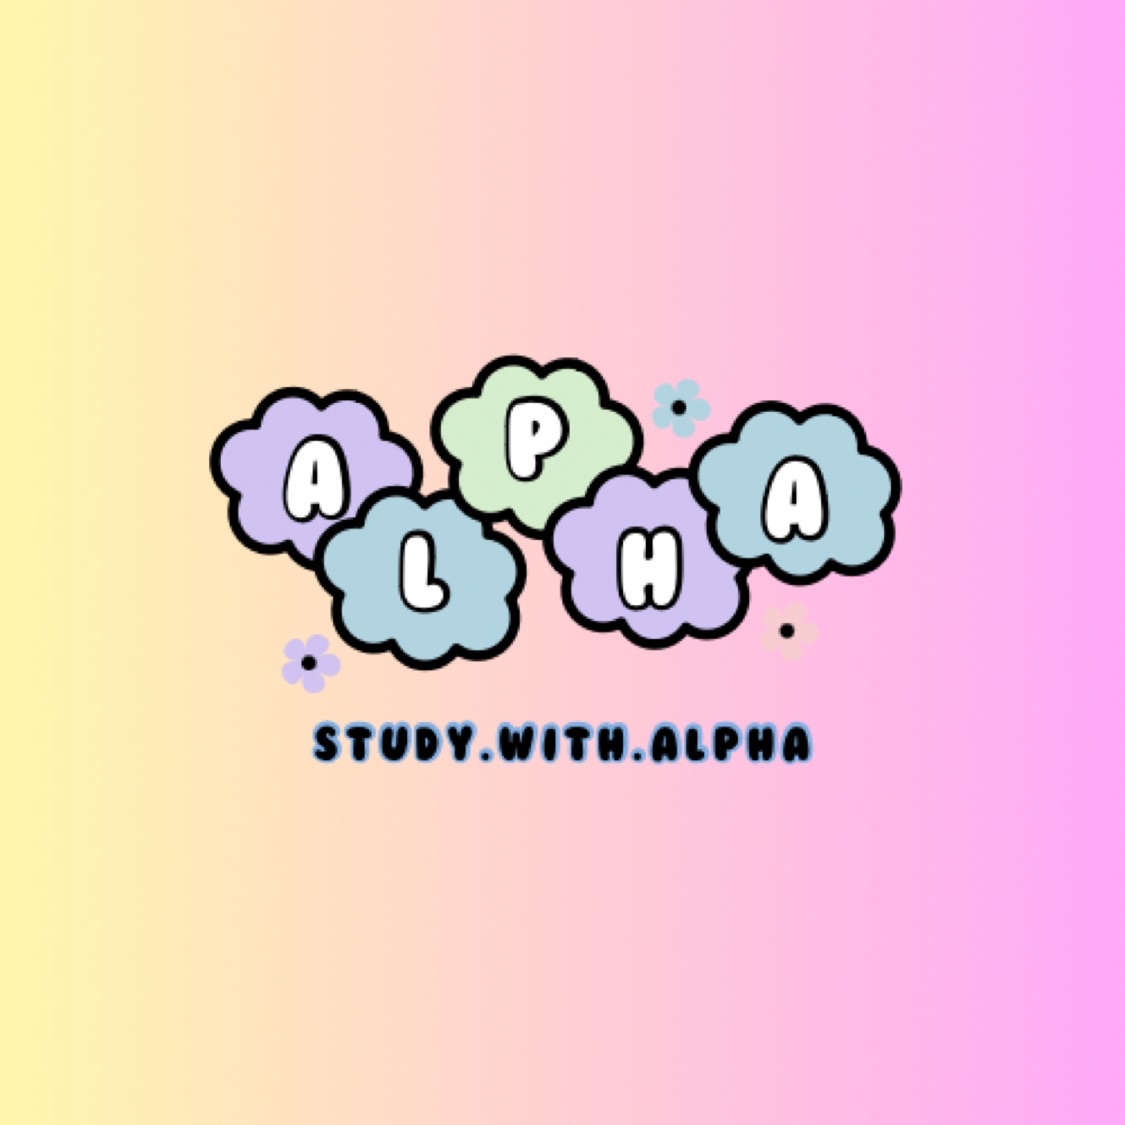 Study.with.alpha